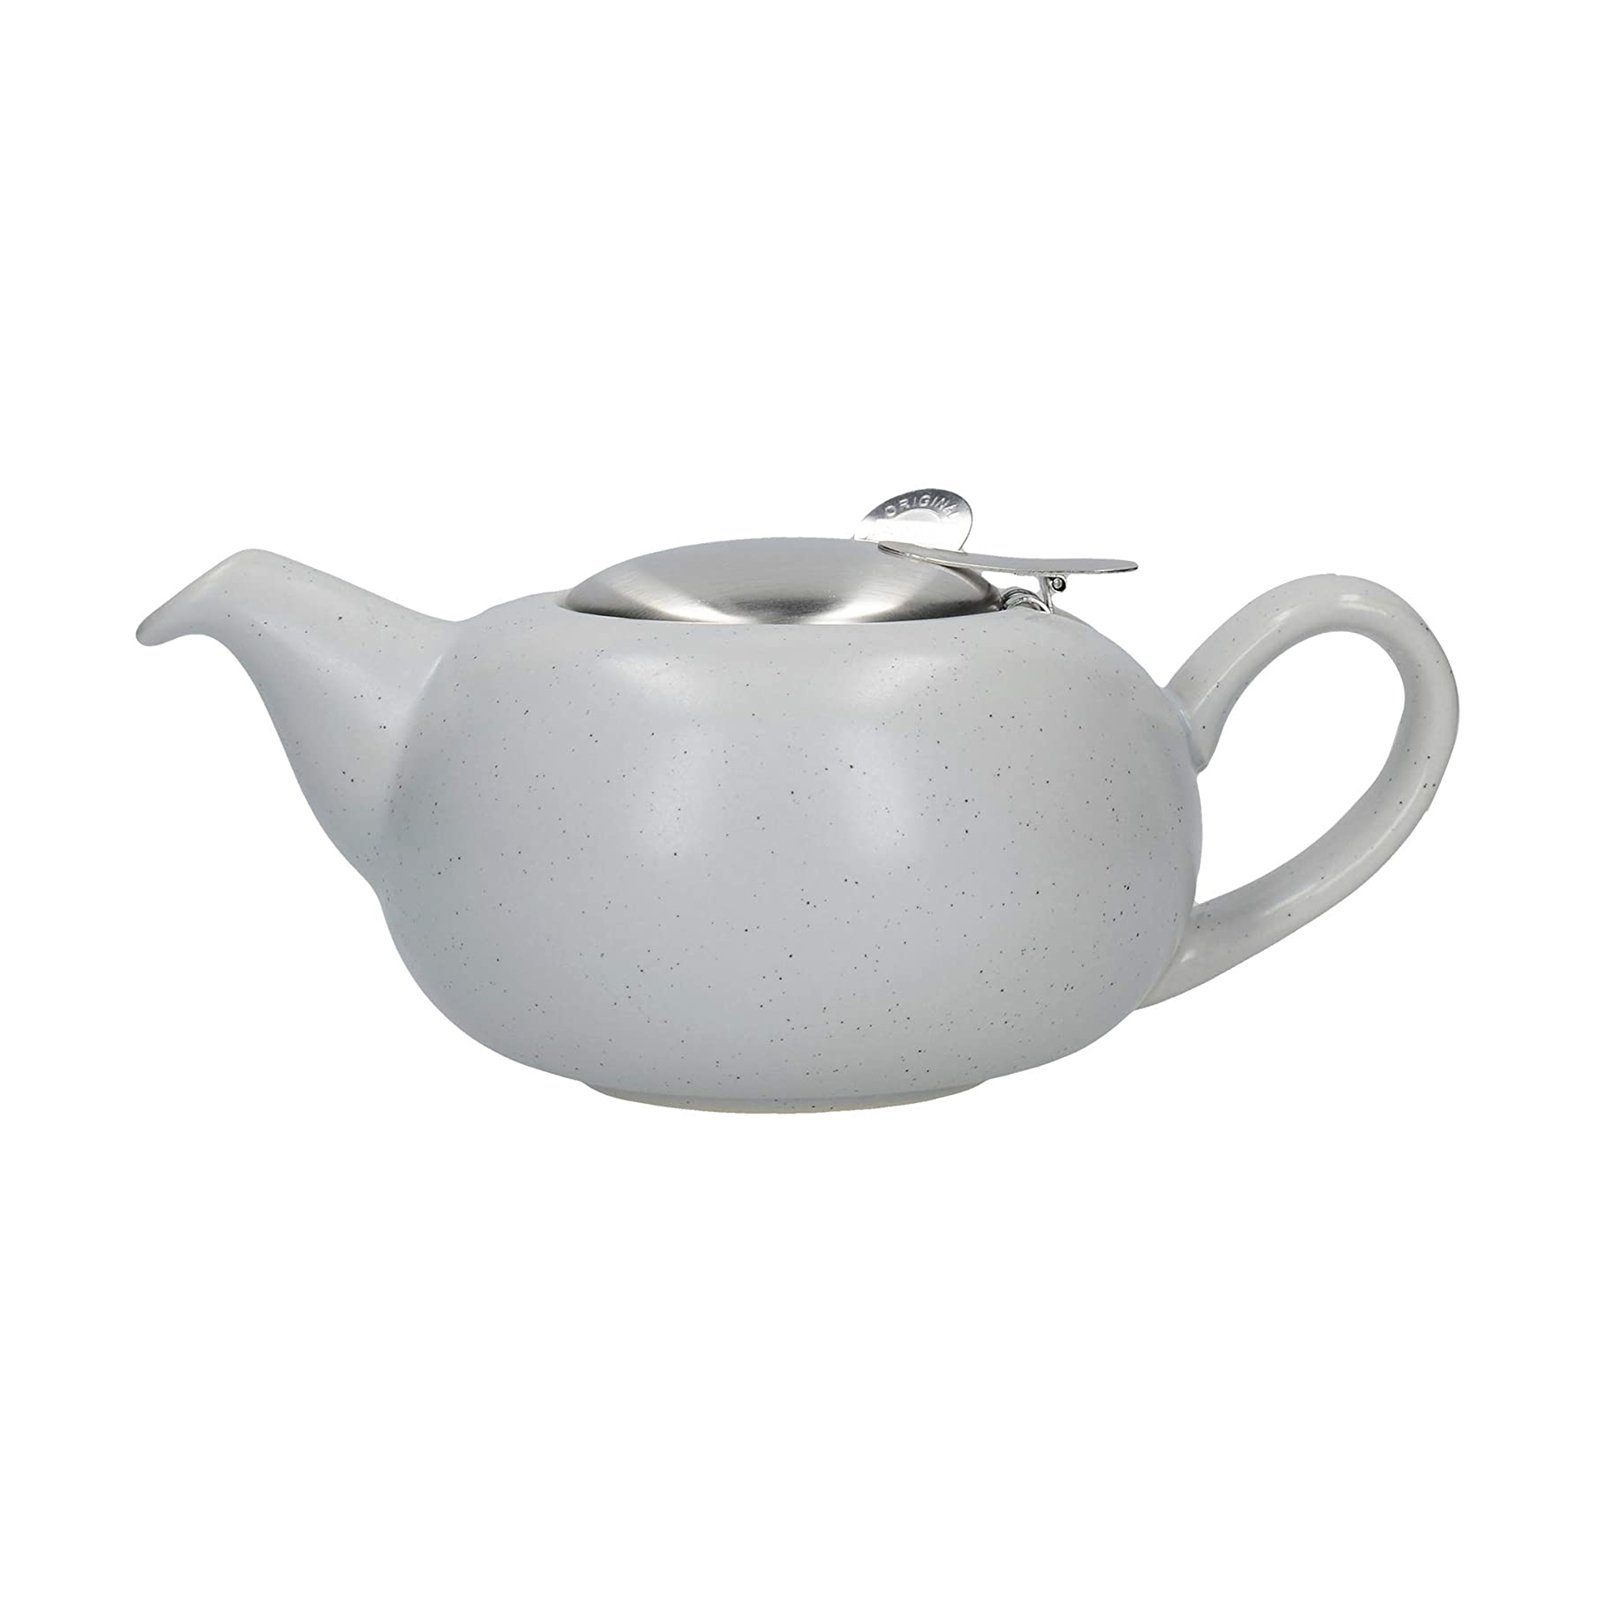 Neuetischkultur Teekanne Tassen, für Hellgrau 2 Matt l 0.5 Teekanne, Keramik/Edelstahlsieb